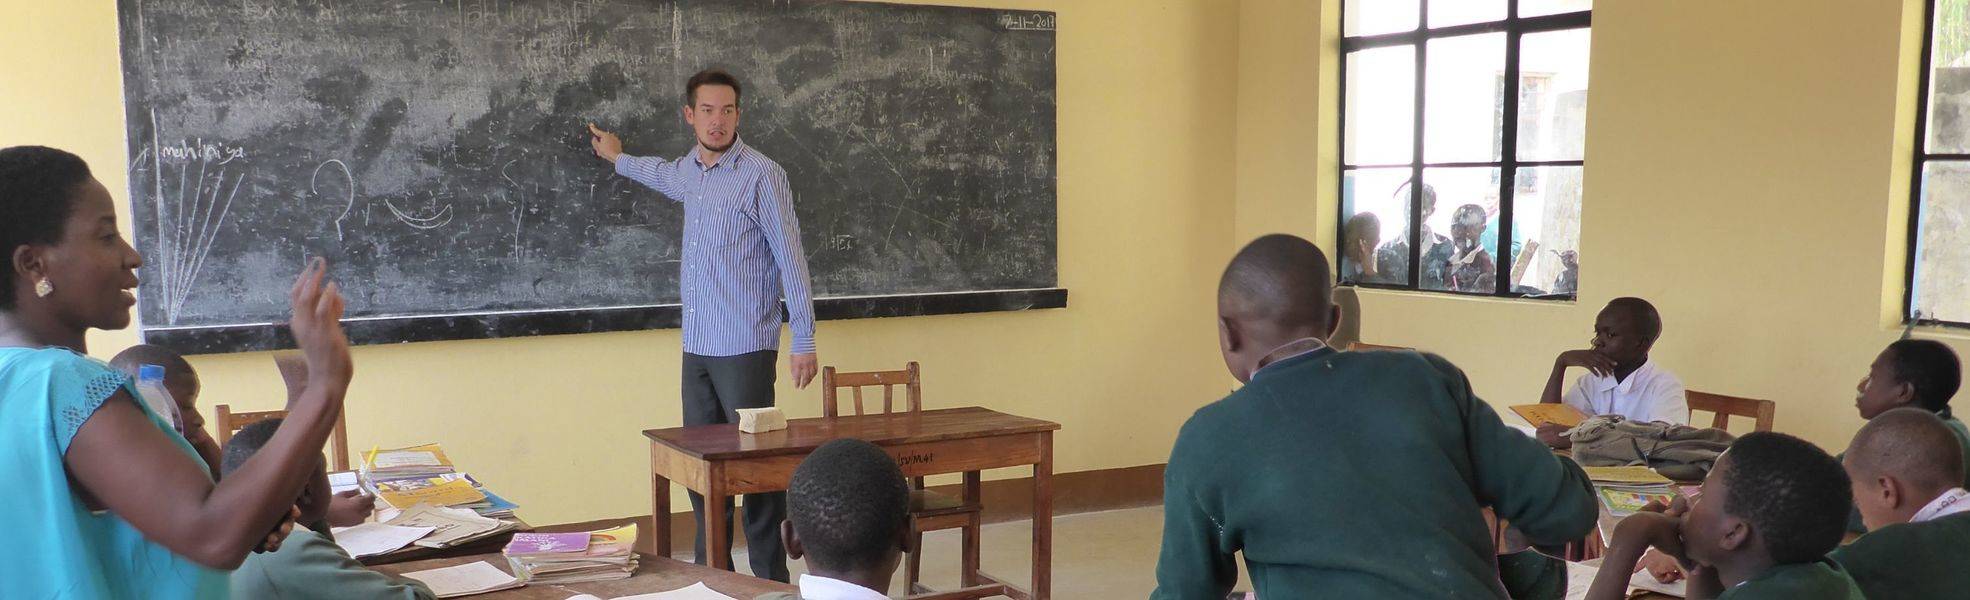 Volunteer at an internship abroad in Tanzania in a school